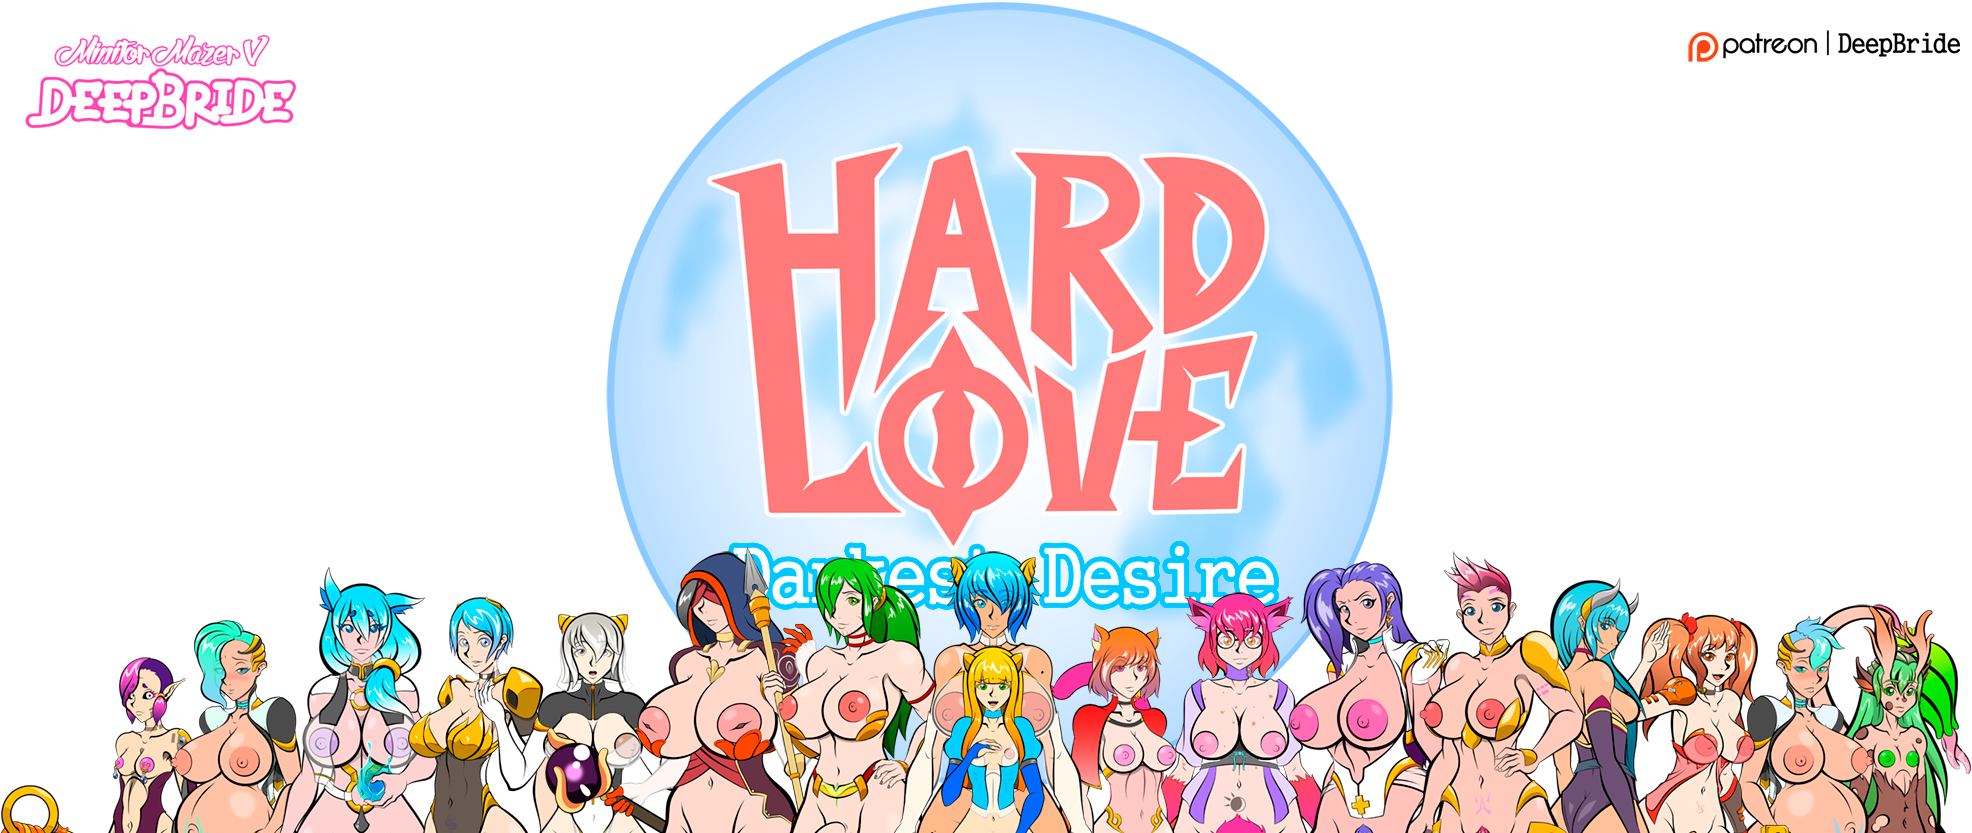 Hard Love - Darkest Desire - Apha